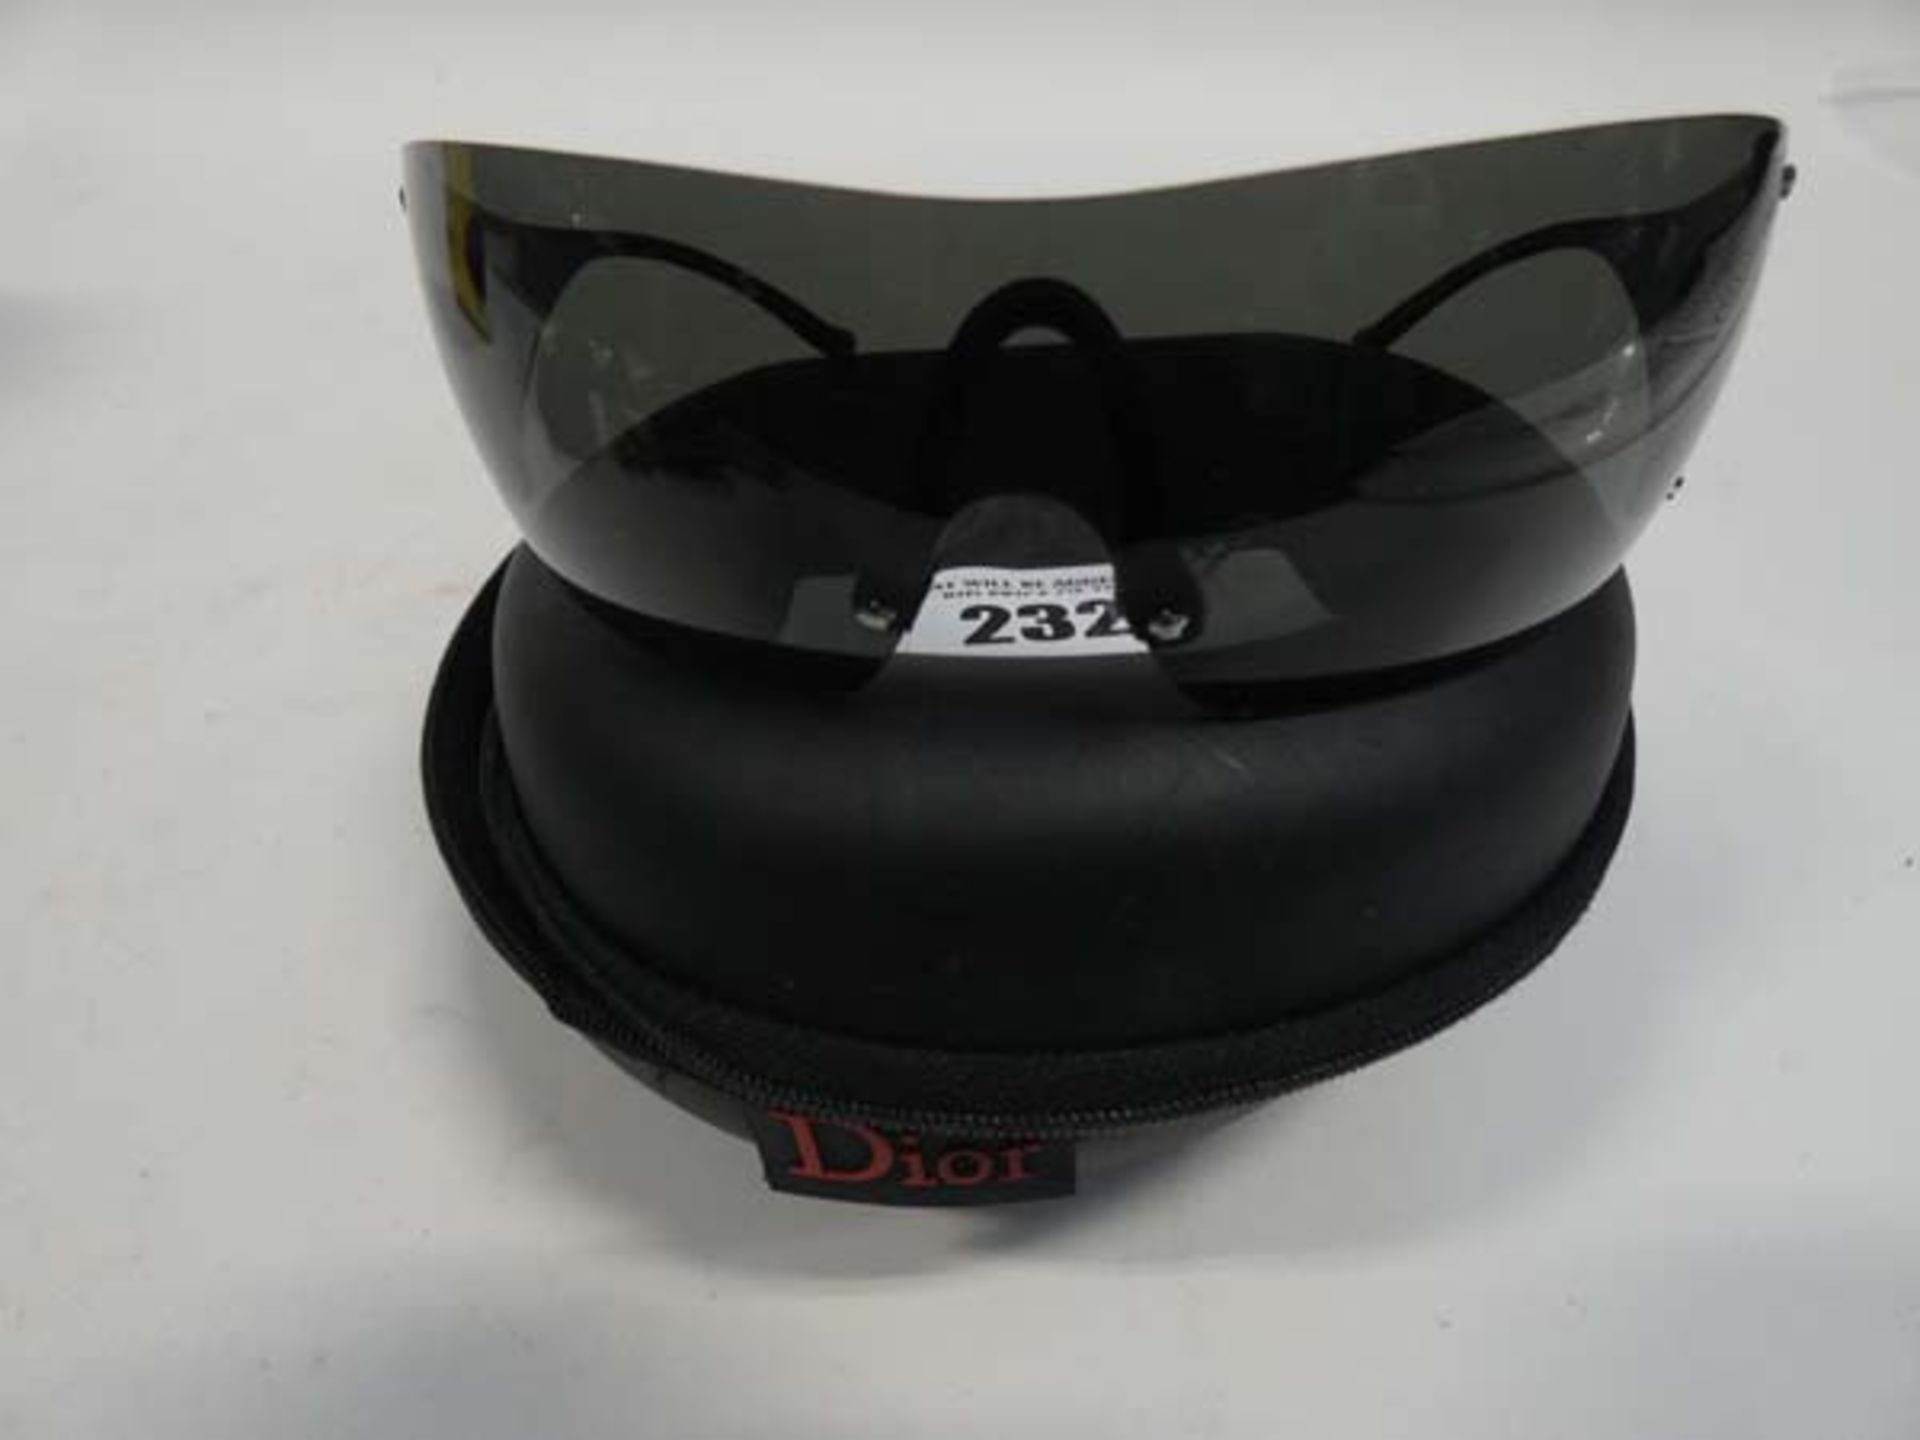 Christine Dior SKI 5 sunglasses with case